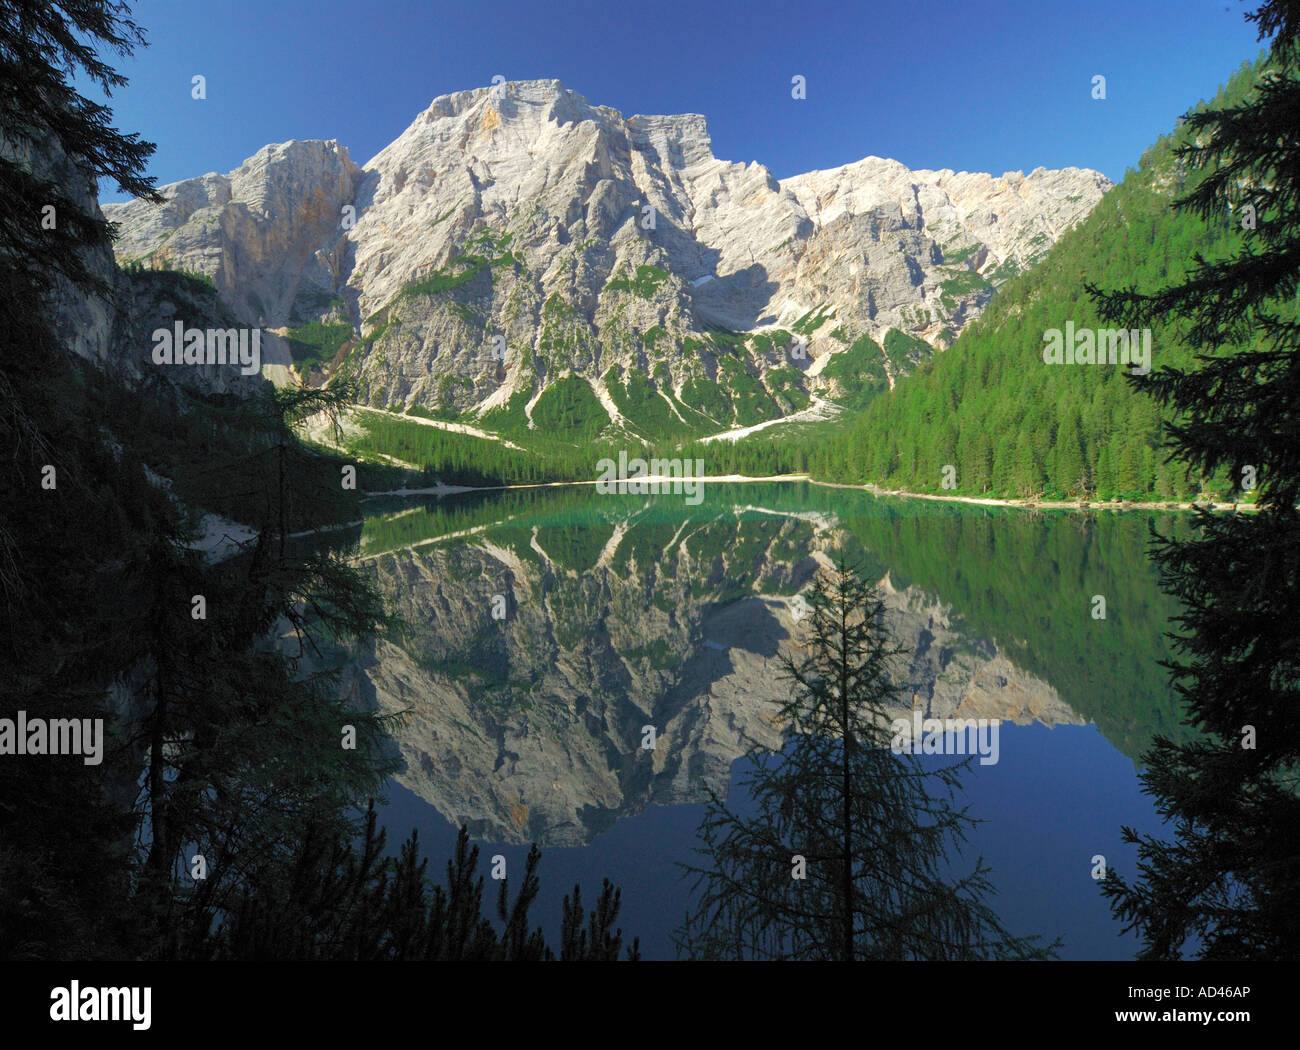 Pragser Wildsee Lago di Braies, Seekofel Croda di Brecco, Pustertal, Tyrol du Sud, Italie Banque D'Images